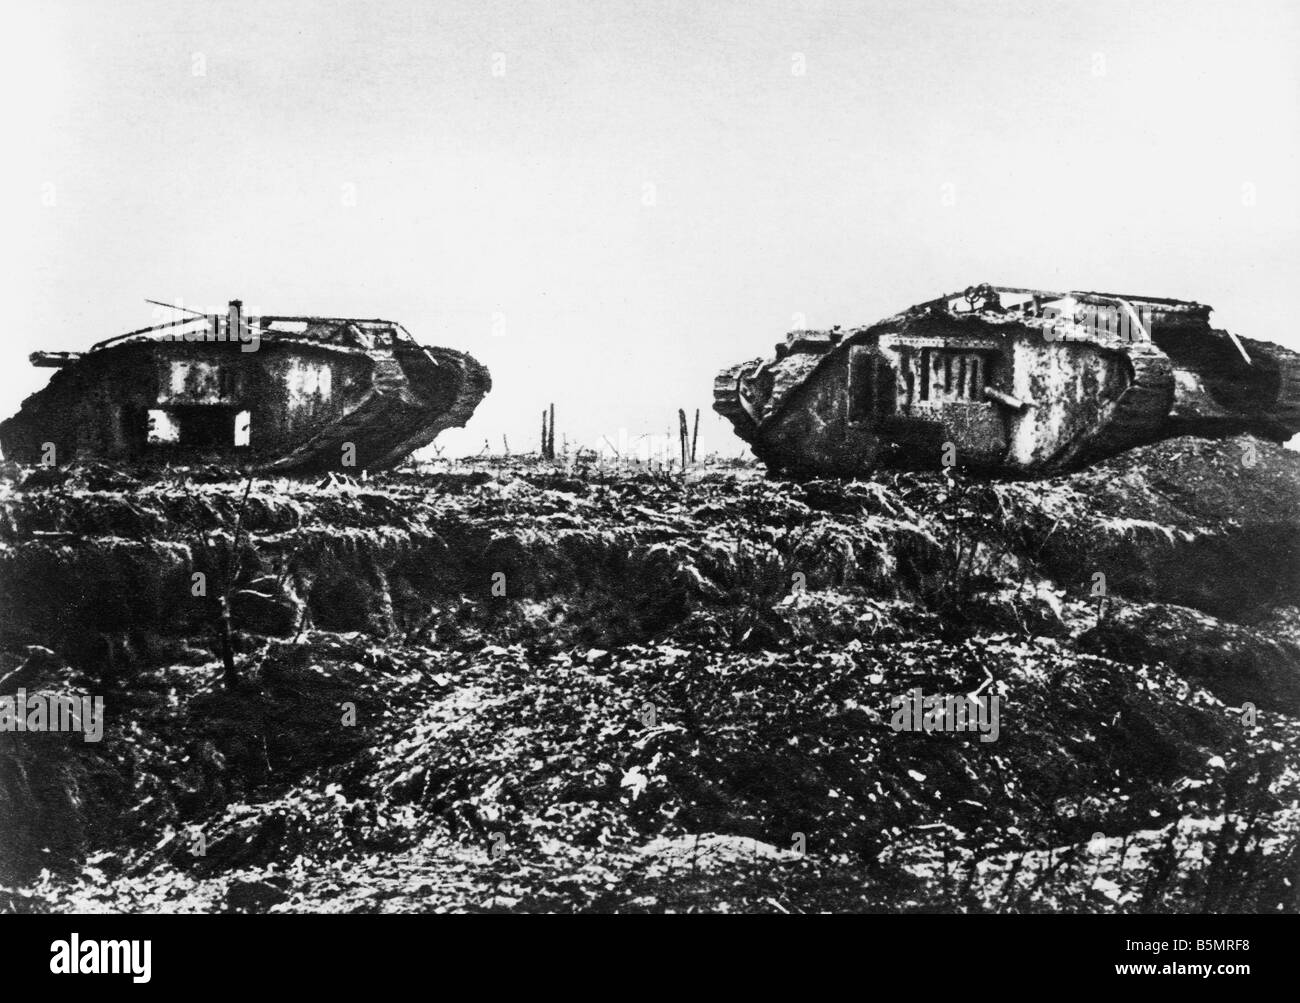 9 1917 11 20 A2 E Tank Battle near Cambrai Engl Tanks World War One 1914 18 Western Front Tank battle near Cambrai 20 29 Novem b Stock Photo